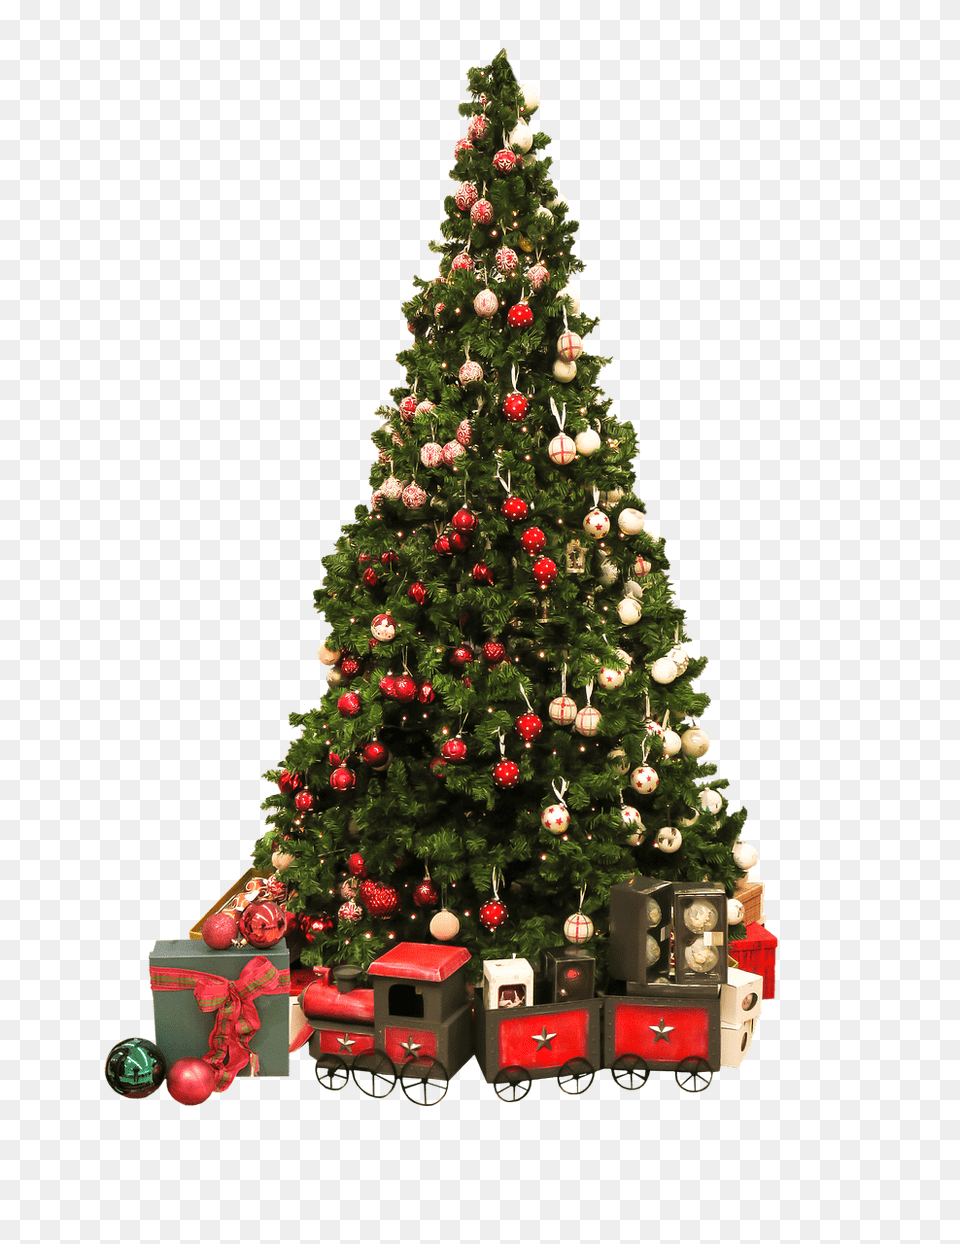 Christmas Tree And Gifts, Plant, Christmas Decorations, Festival, Christmas Tree Png Image